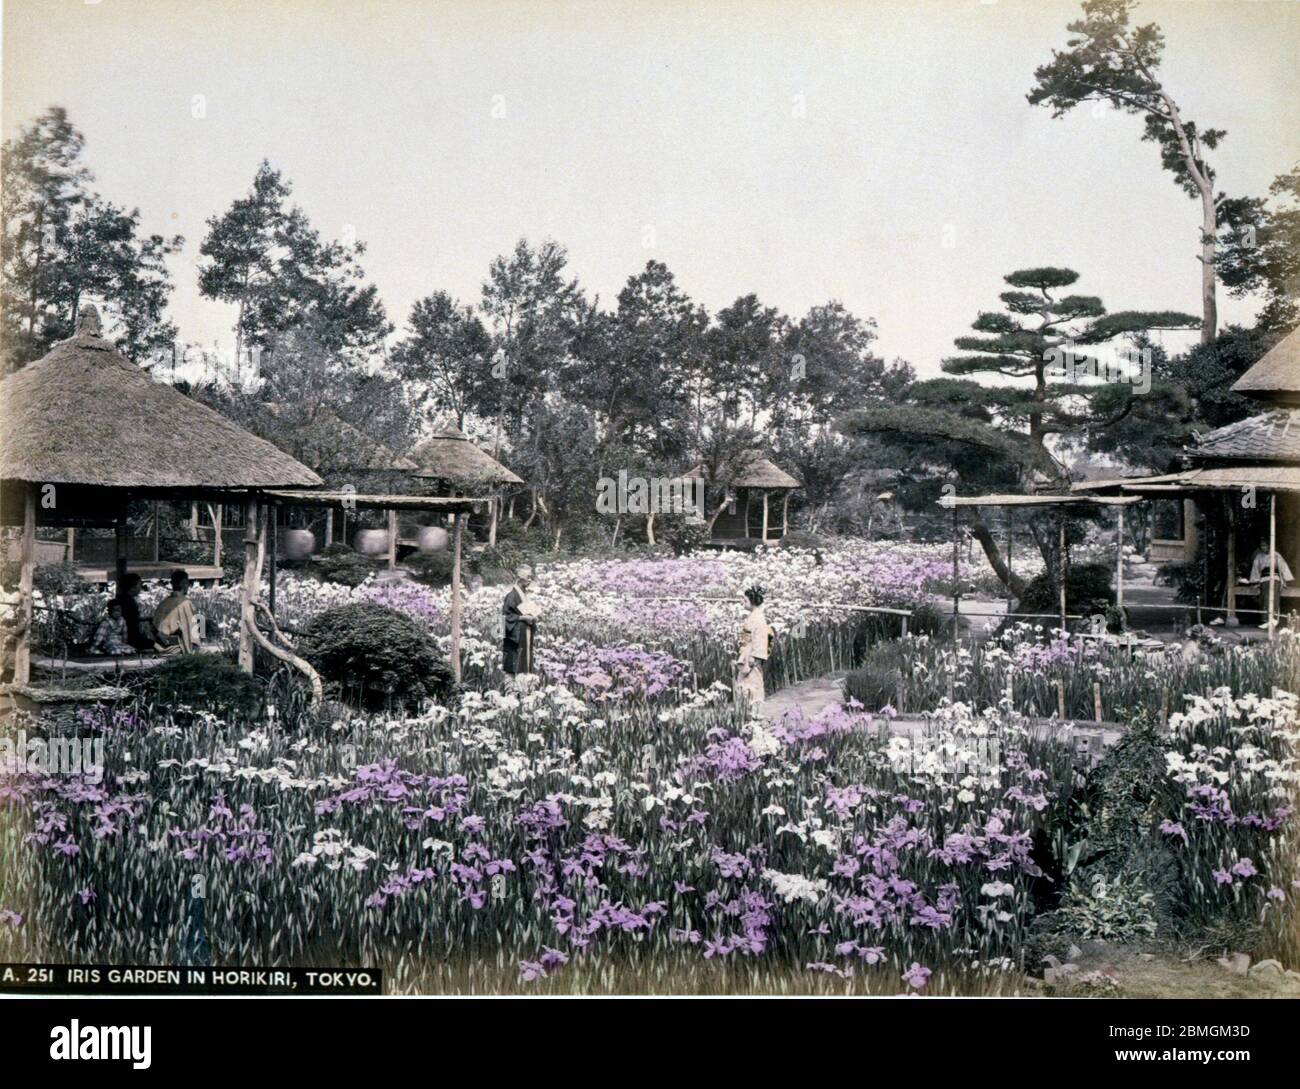 [ 1880s Japan - Iris Flowers at Horikiri ] —   Women in kimono admire the flowers at the famed Iris garden of Horikiri Shobuen Garden (堀切菖蒲園) in Tokyo.  19th century vintage albumen photograph. Stock Photo